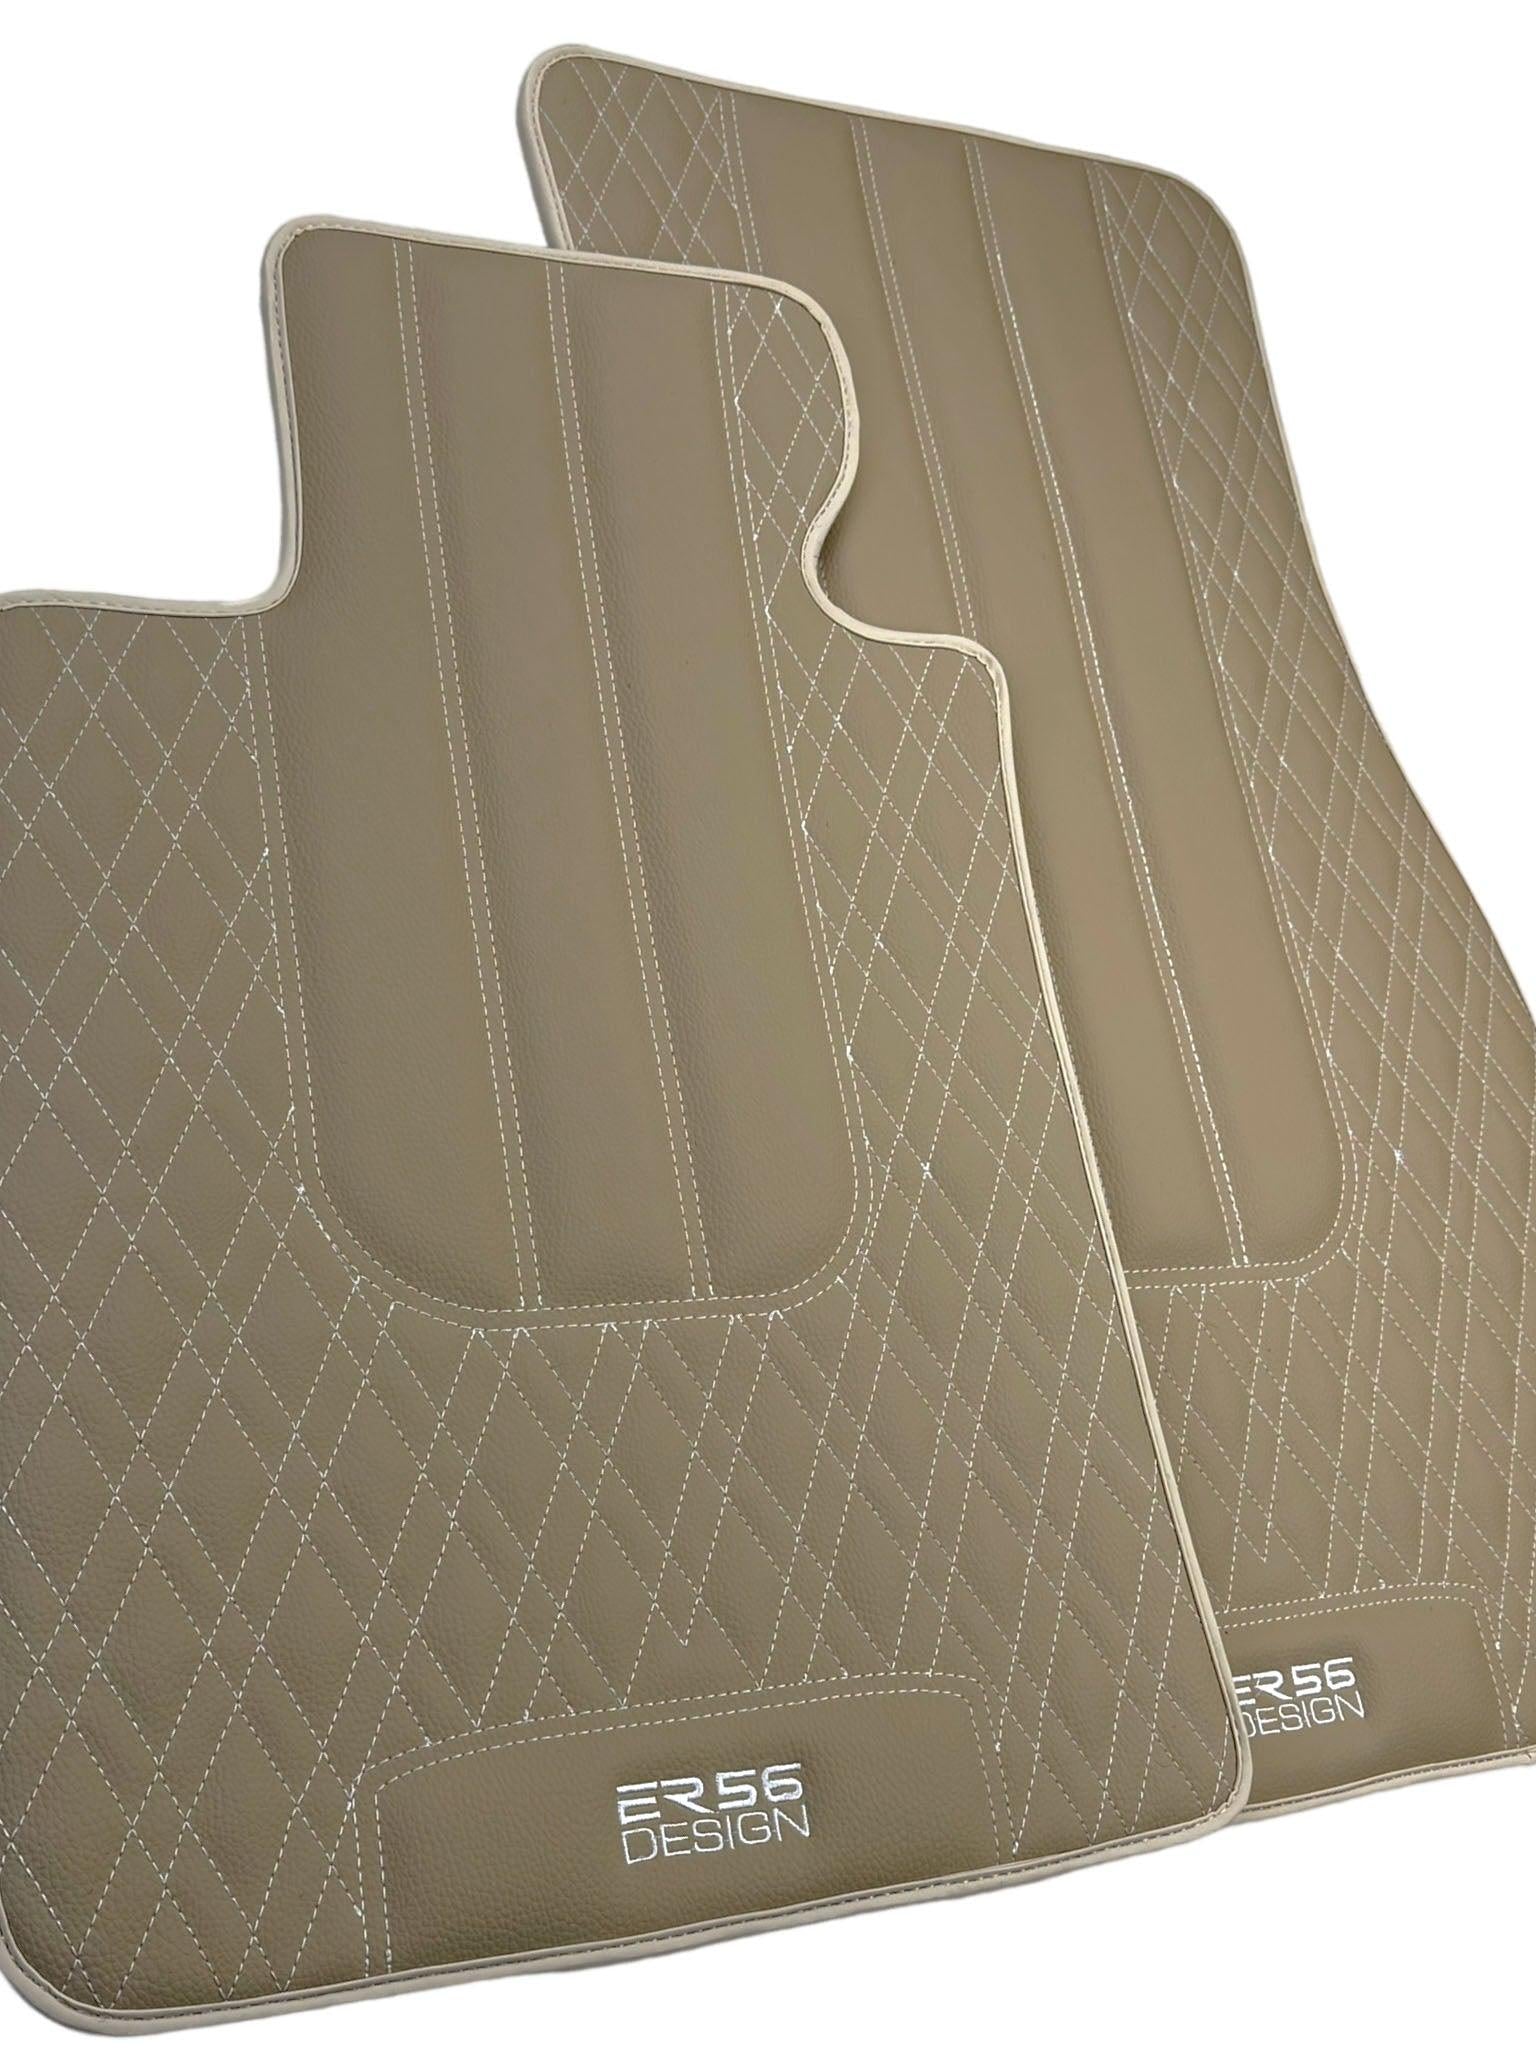 Beige Leather Floor Floor Mats For BMW 6 Series G32 GT Gran Turismo | Fighter Jet Edition AutoWin Brand |Sky Blue Trim